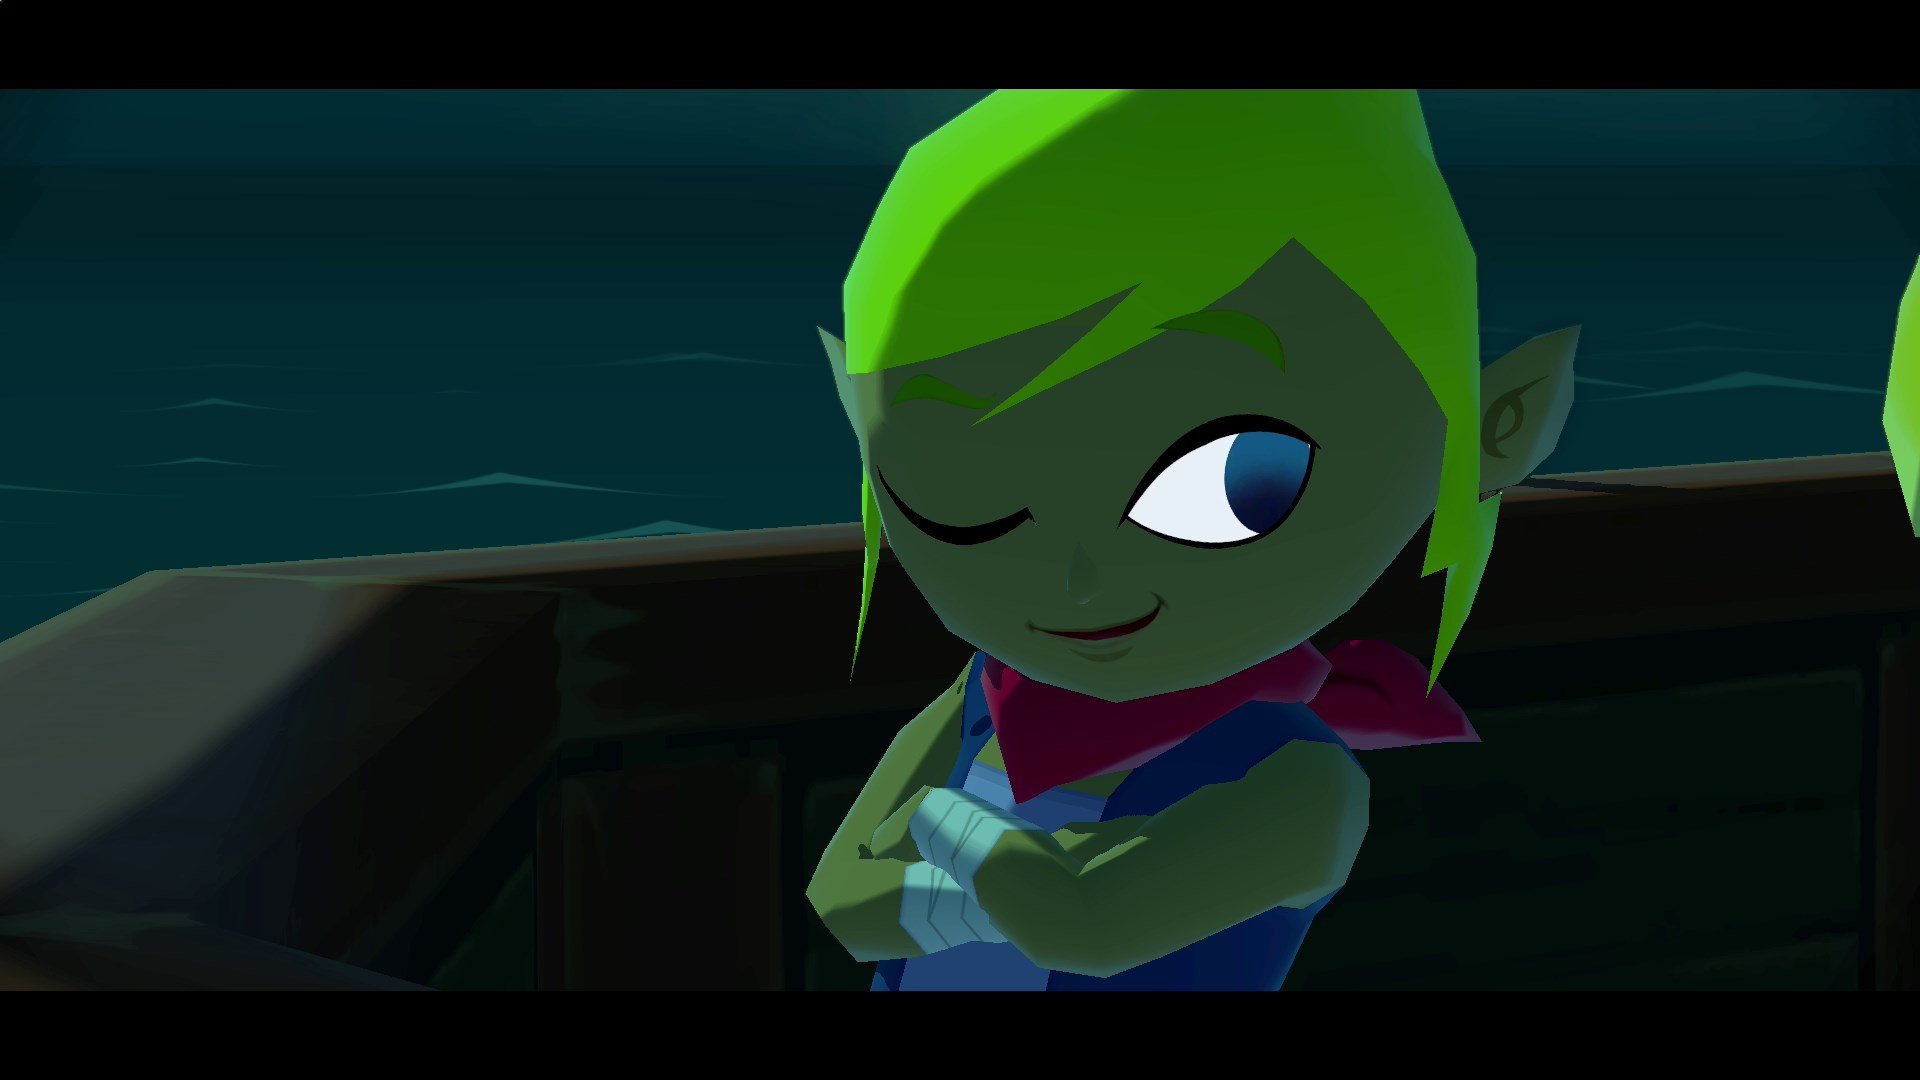 The Legend Of Zelda The Wind Waker Hd 2013 Wii U Screenshots